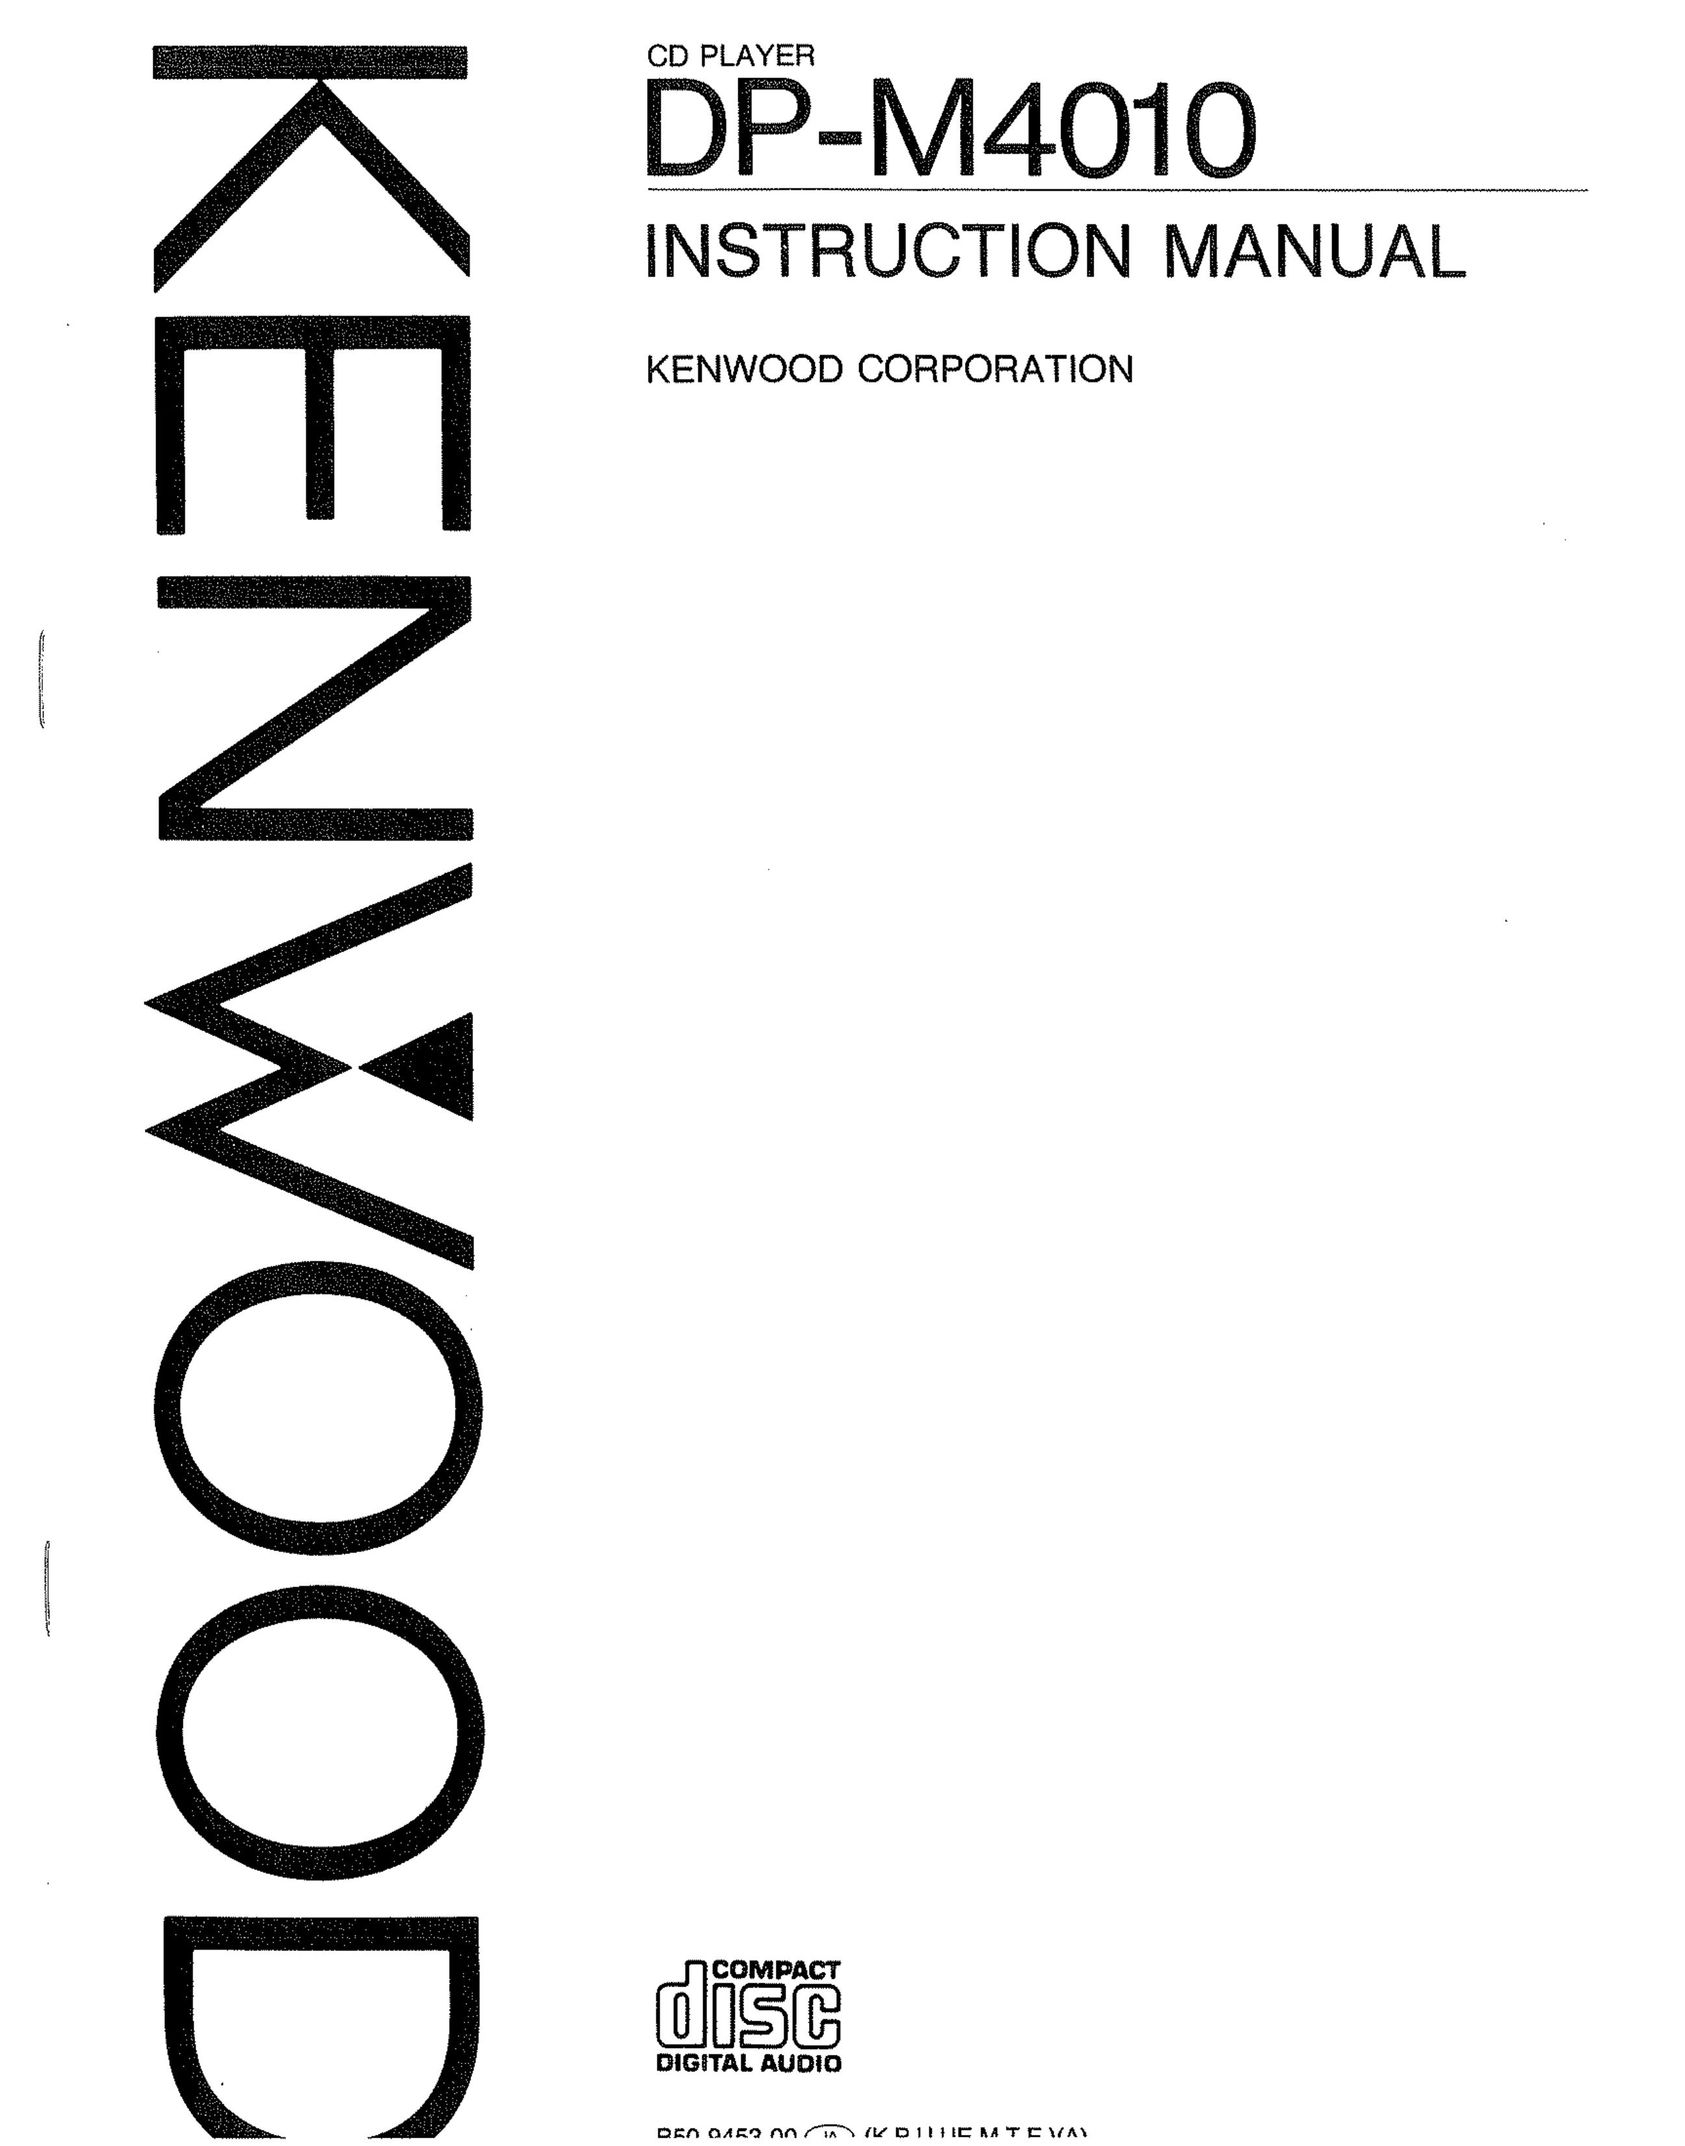 Kenwood DP-M4010 CD Player User Manual